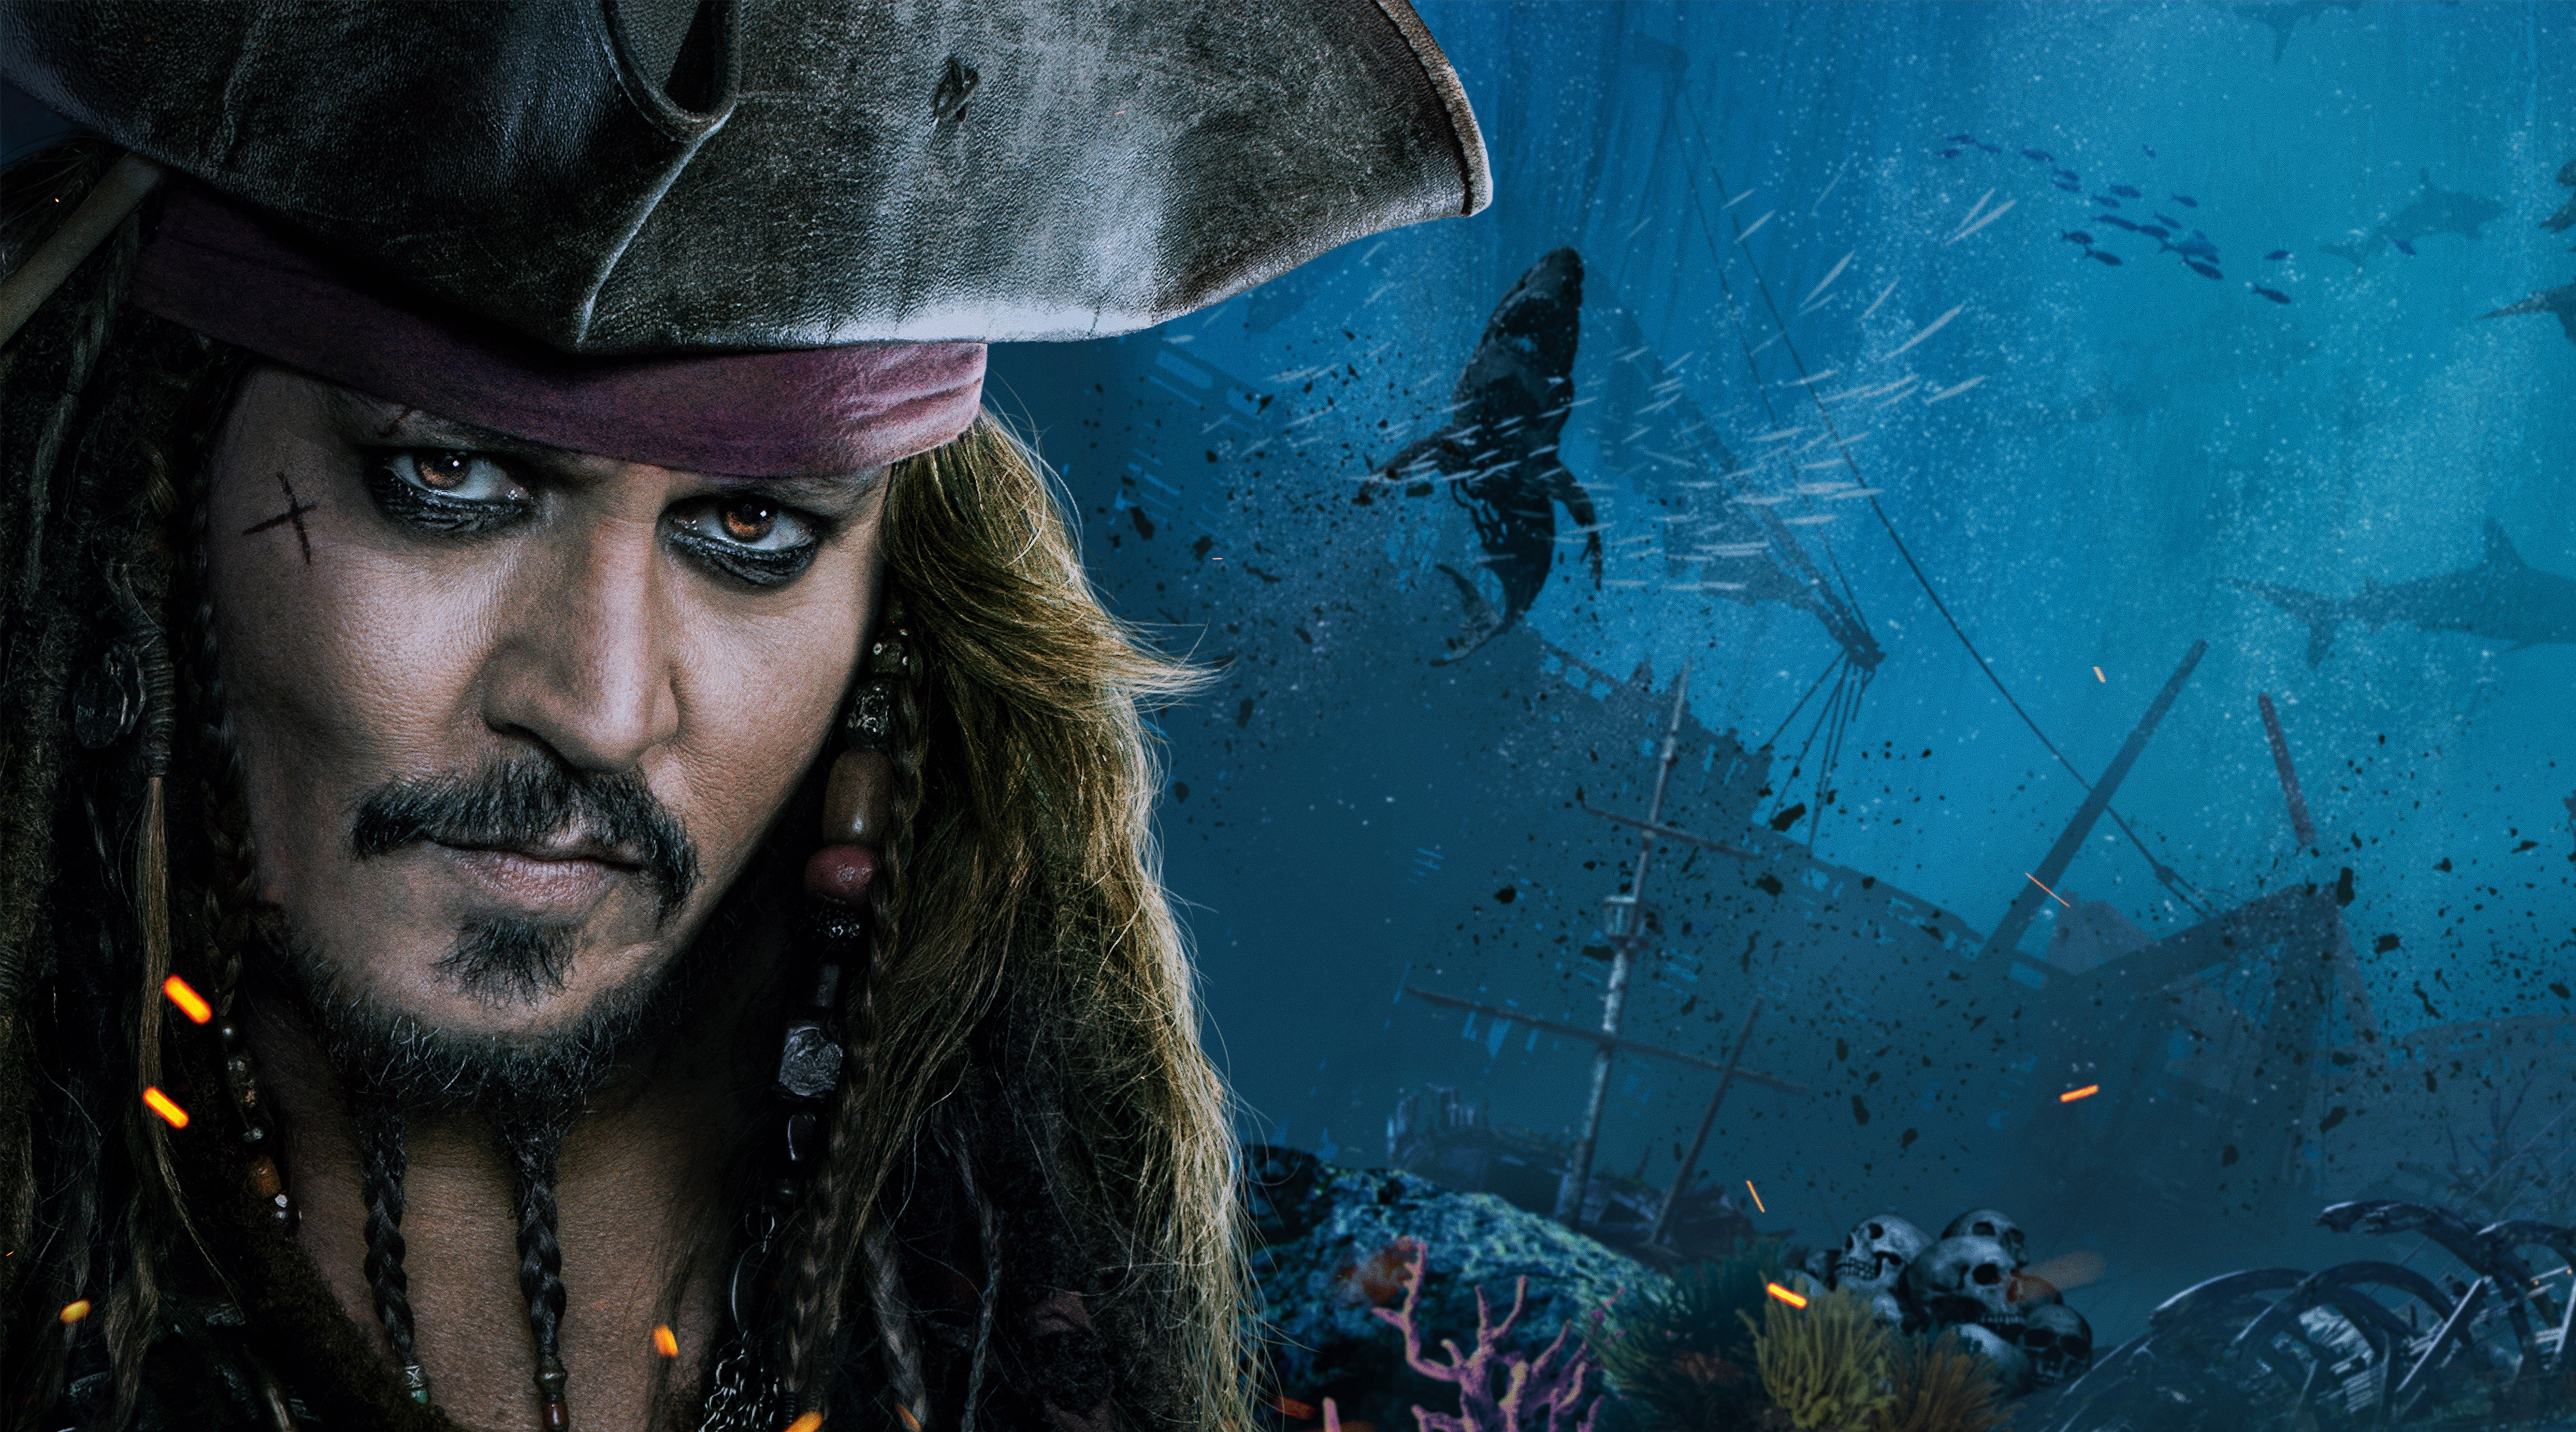 Download Captain Jack Sparrow Wallpaper